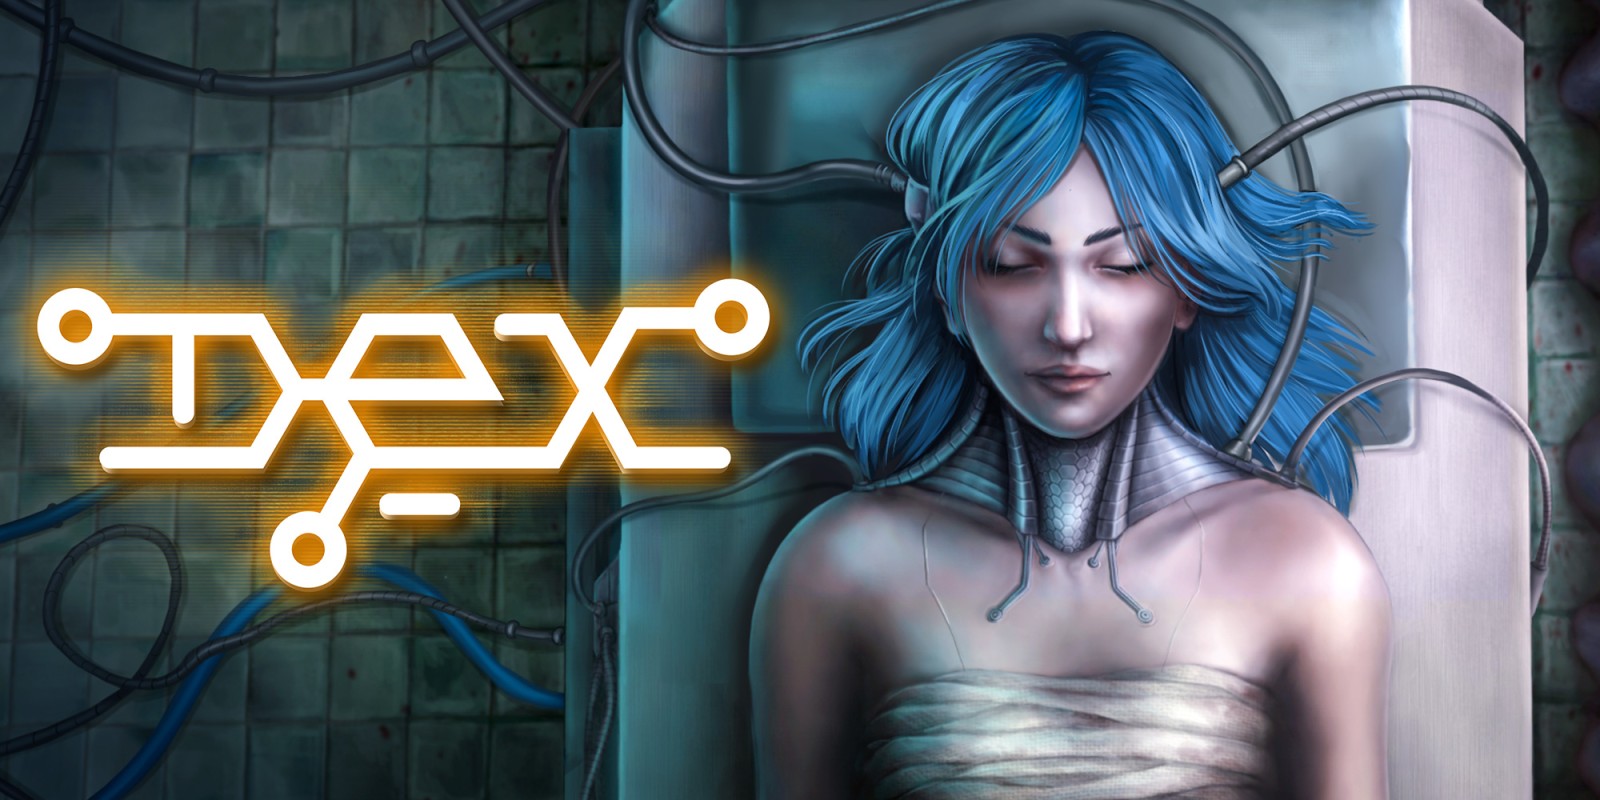 Dex Nintendo – Metroidvania Meets Blade Runner